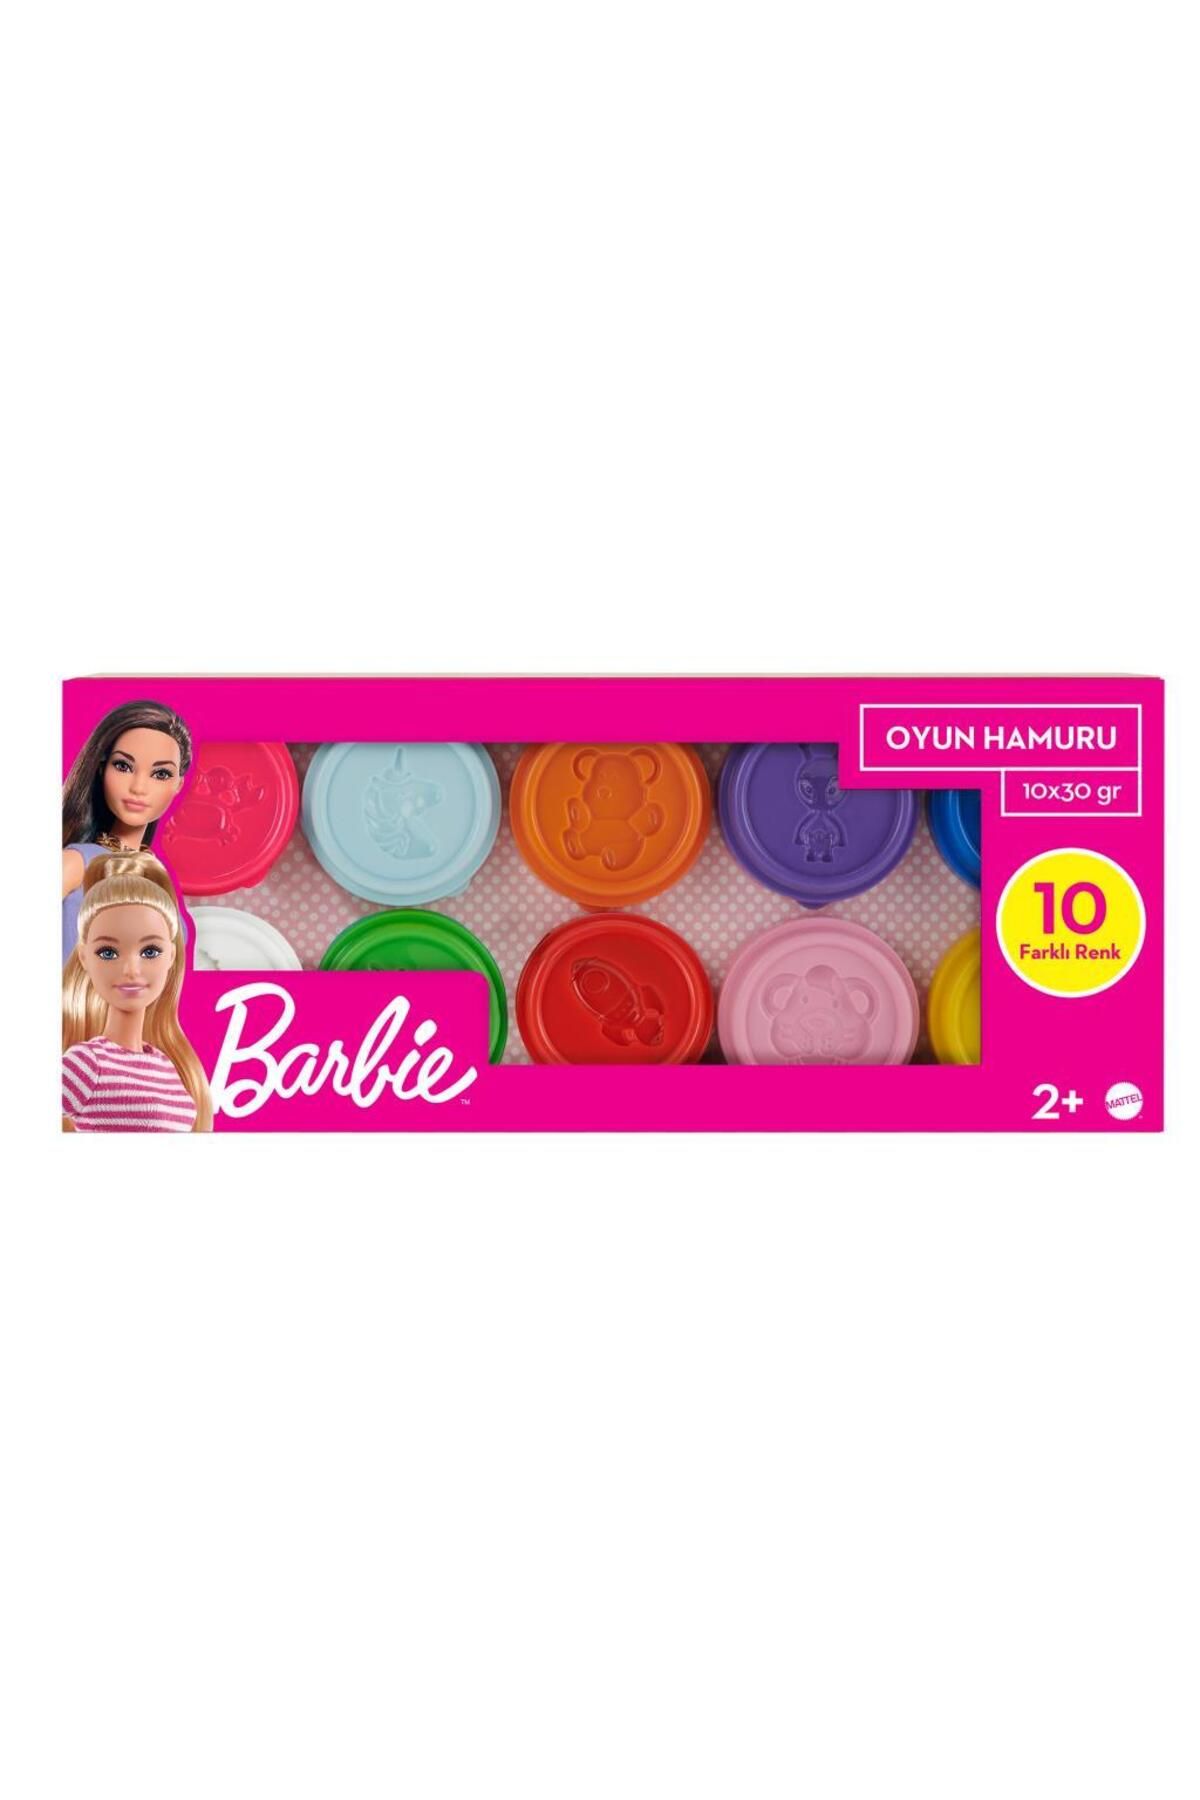 Barbie Oyun Hamuru 10'lu Paket Hhj37